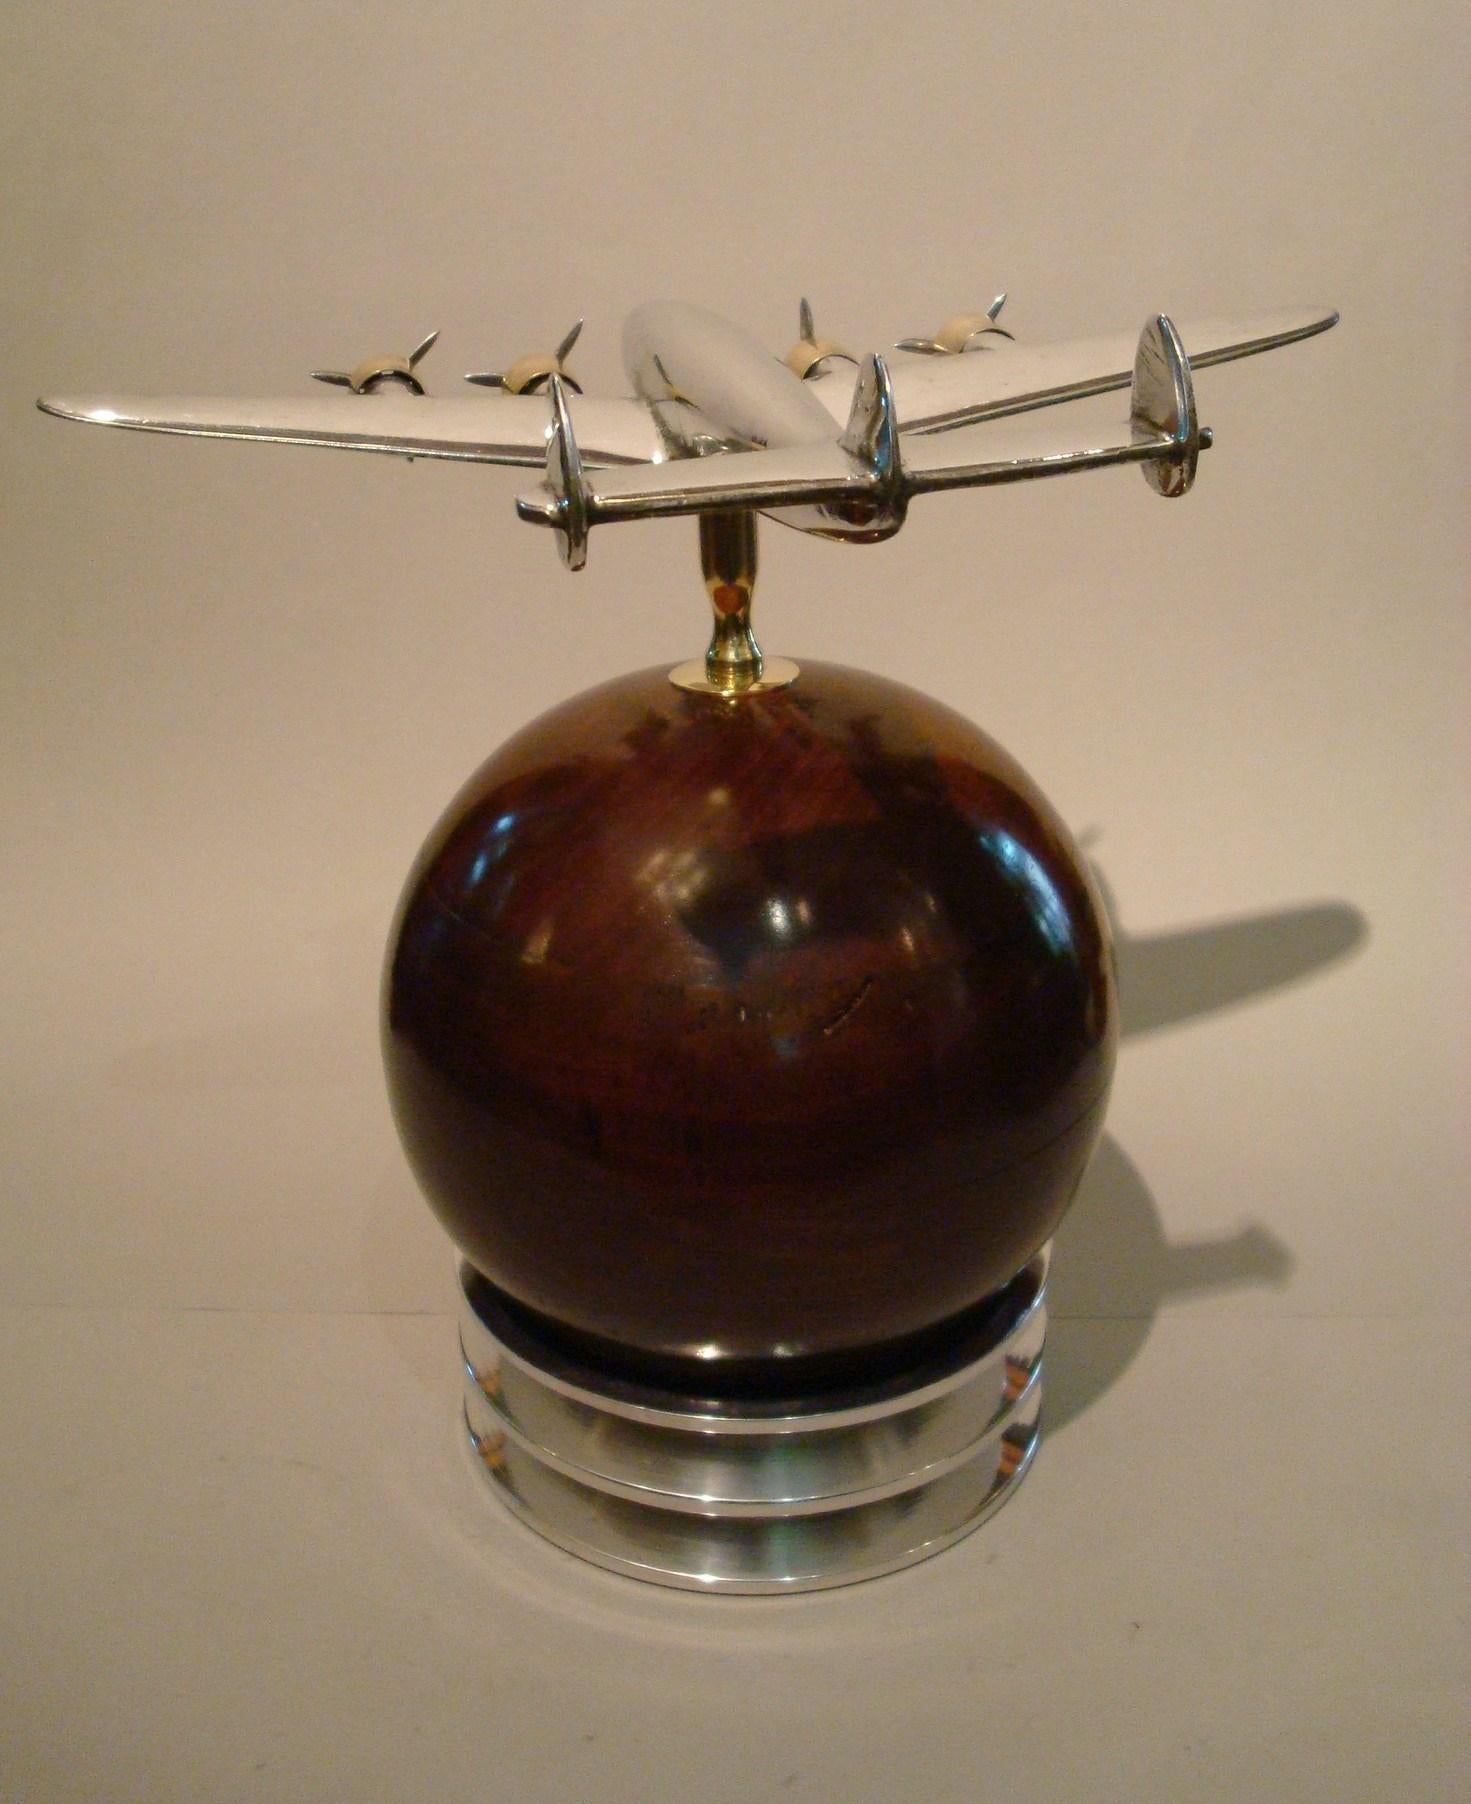 Cast Aviation Lockheed Constellation Vintage Desk Airplane Model